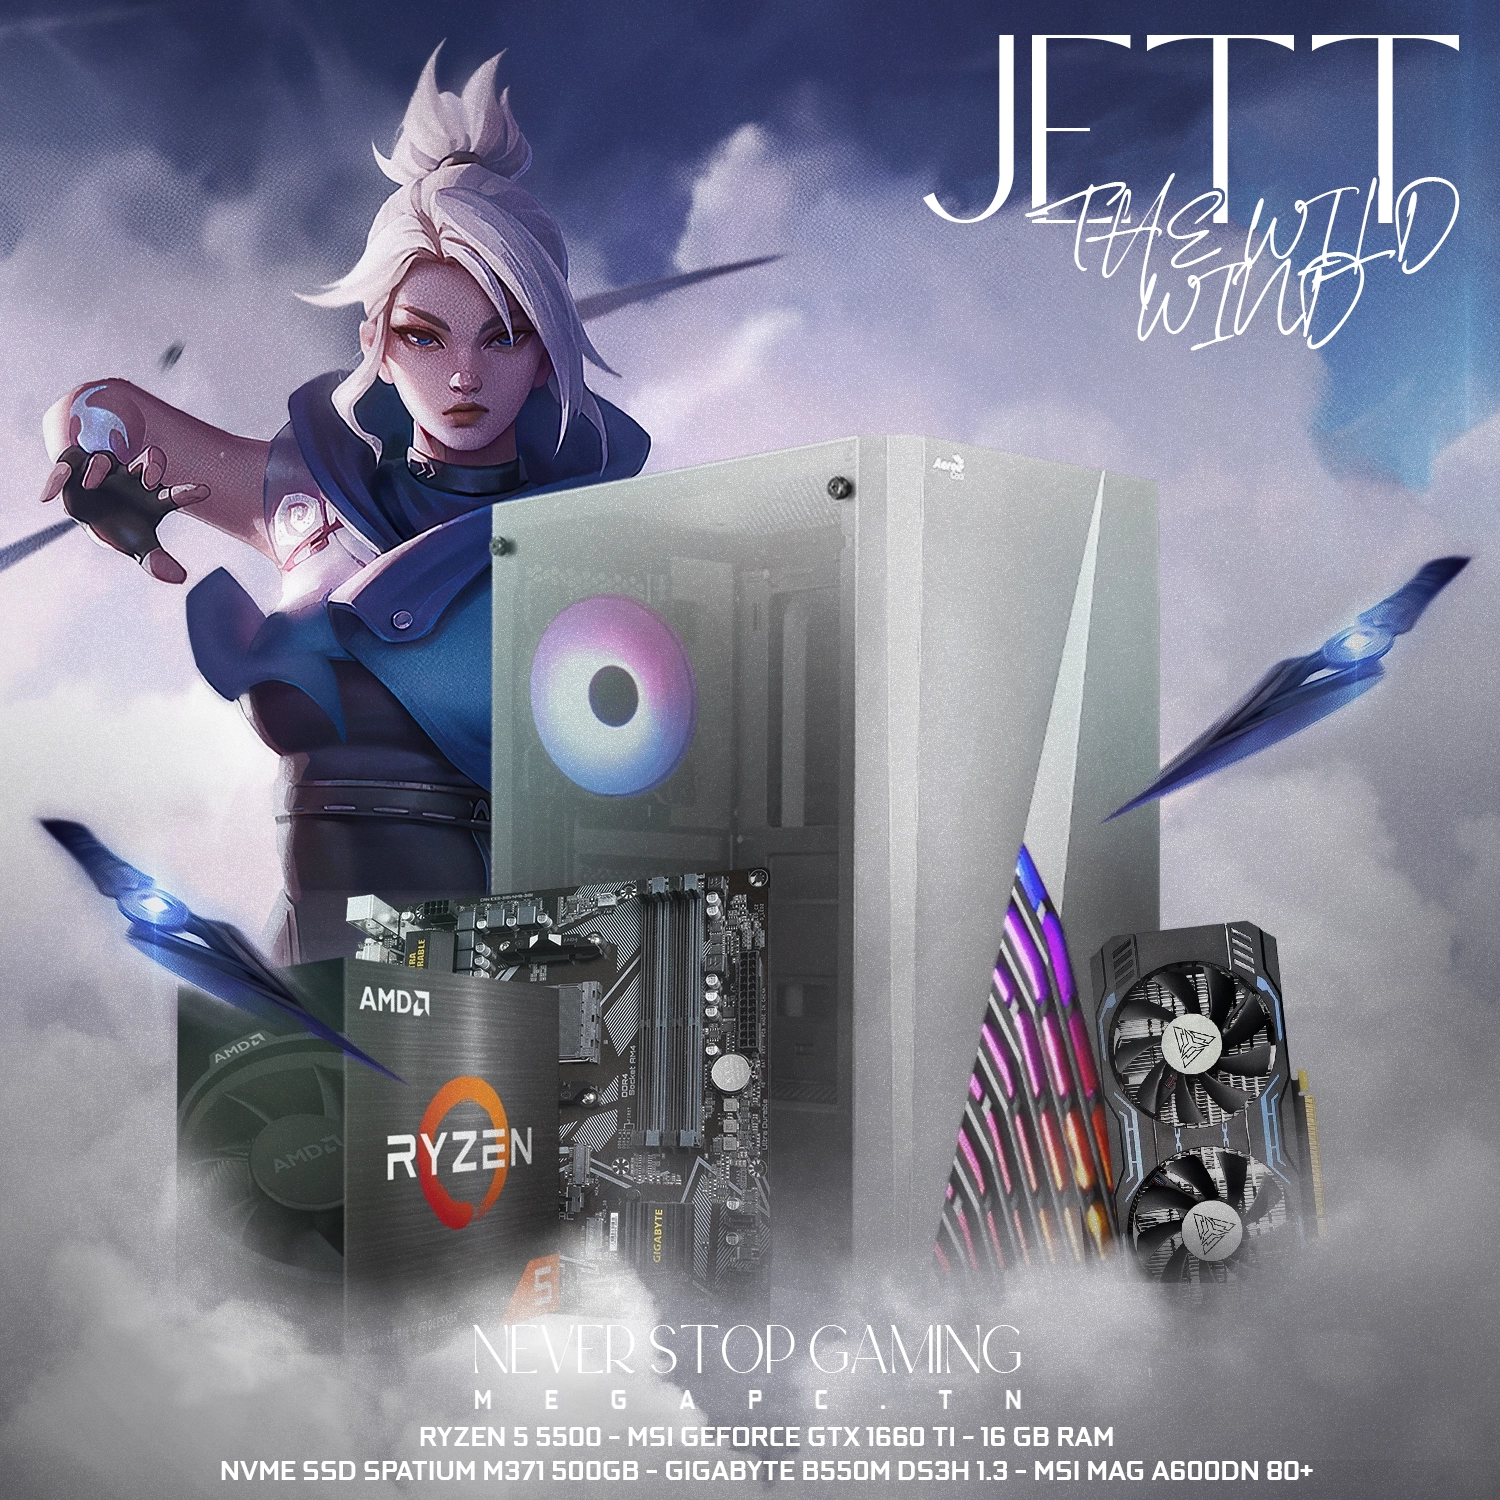 Jett 1 | RYZEN 5 5500 | GTX 1660 TI  | 16GB RAM | 500GB NVMe